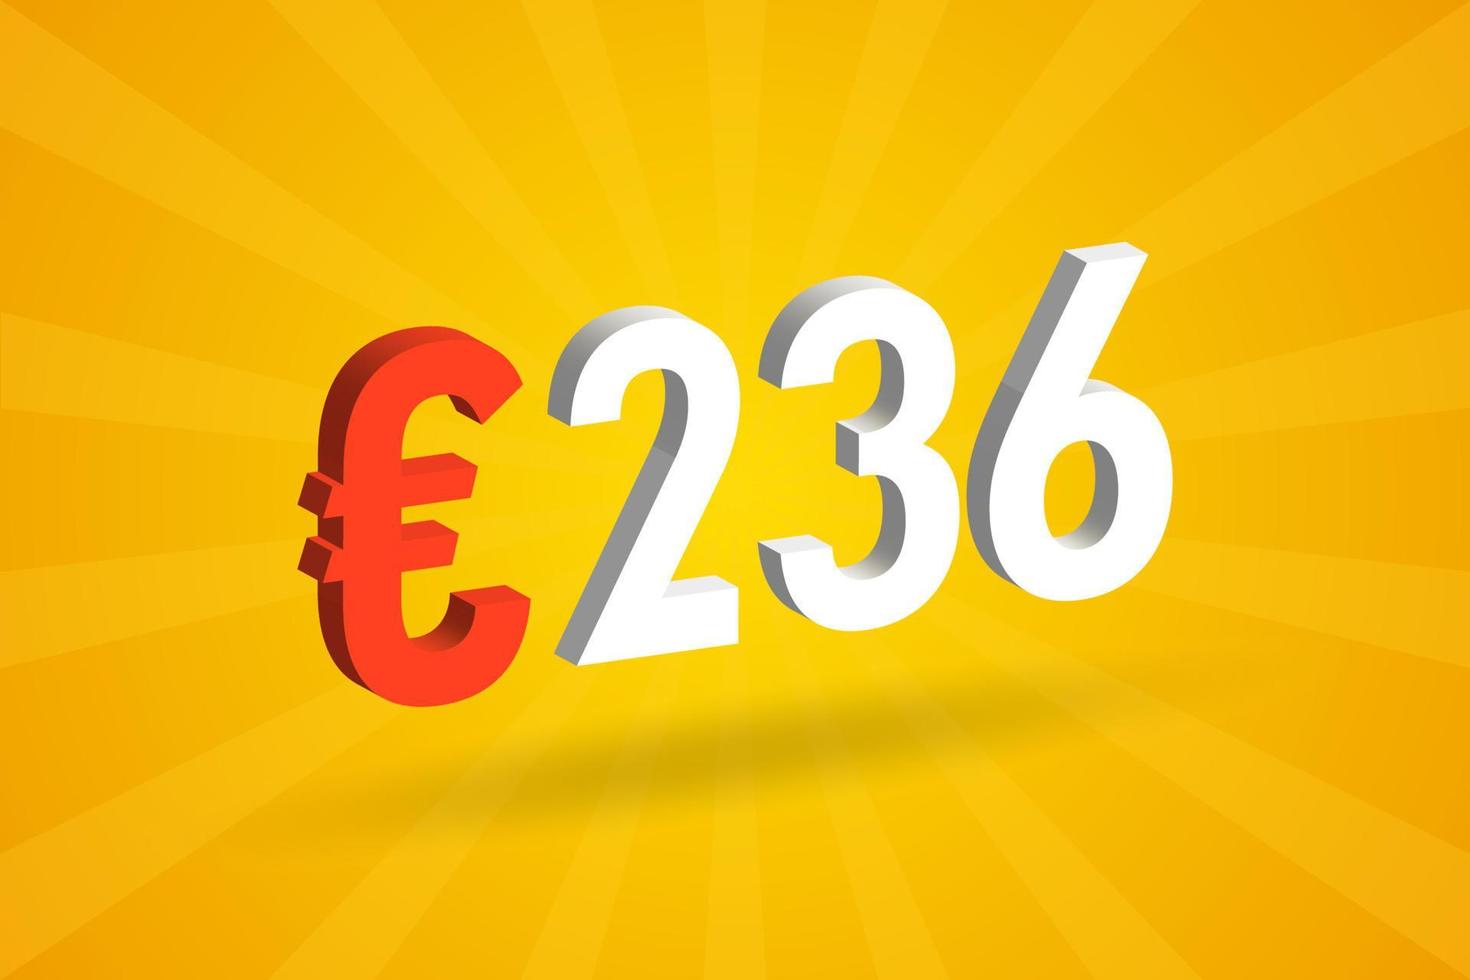 236 Euro Currency 3D vector text symbol. 3D 236 Euro European Union Money stock vector